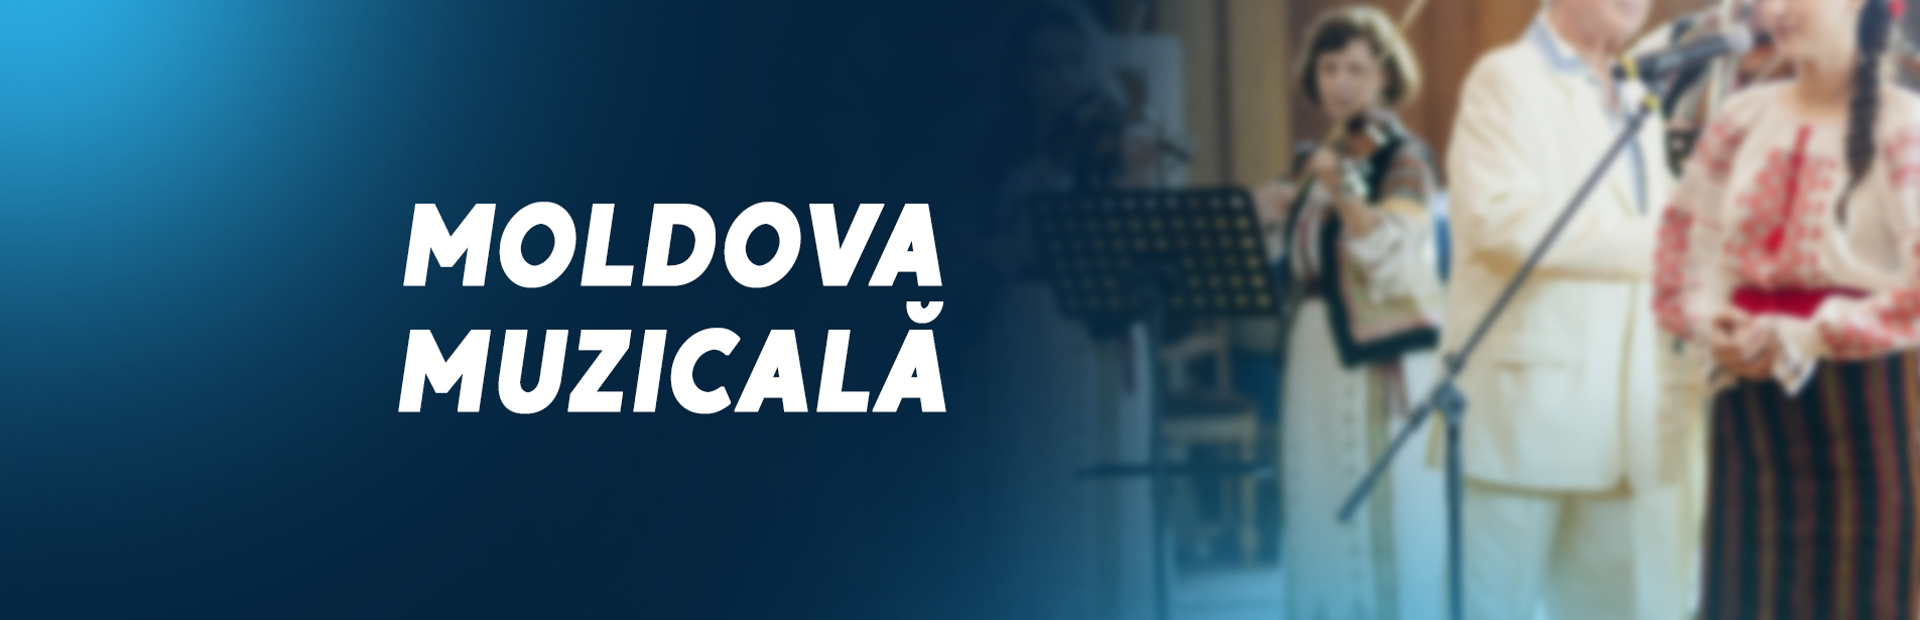 Moldova muzicală